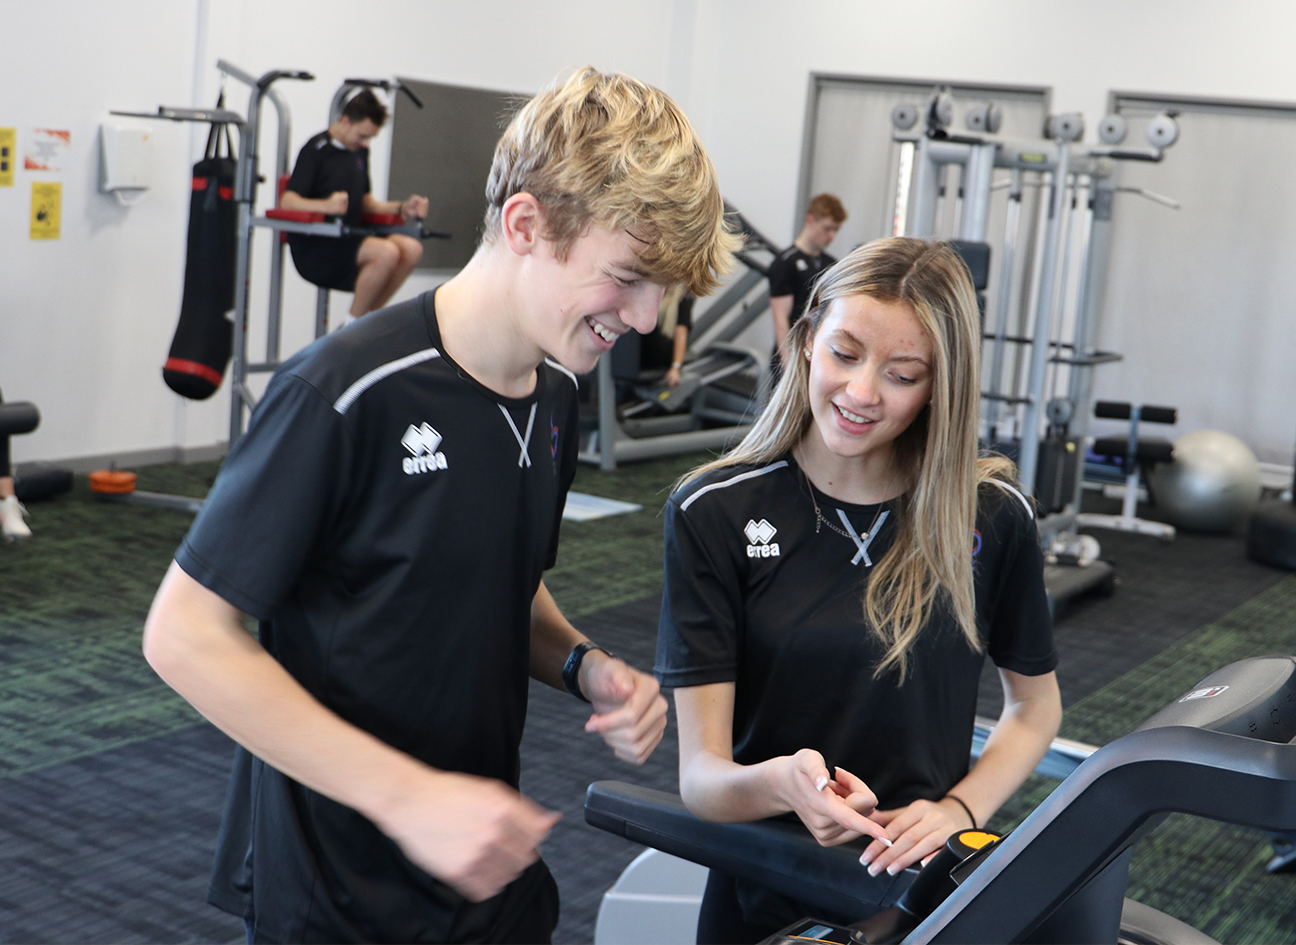 Students using a treadmill